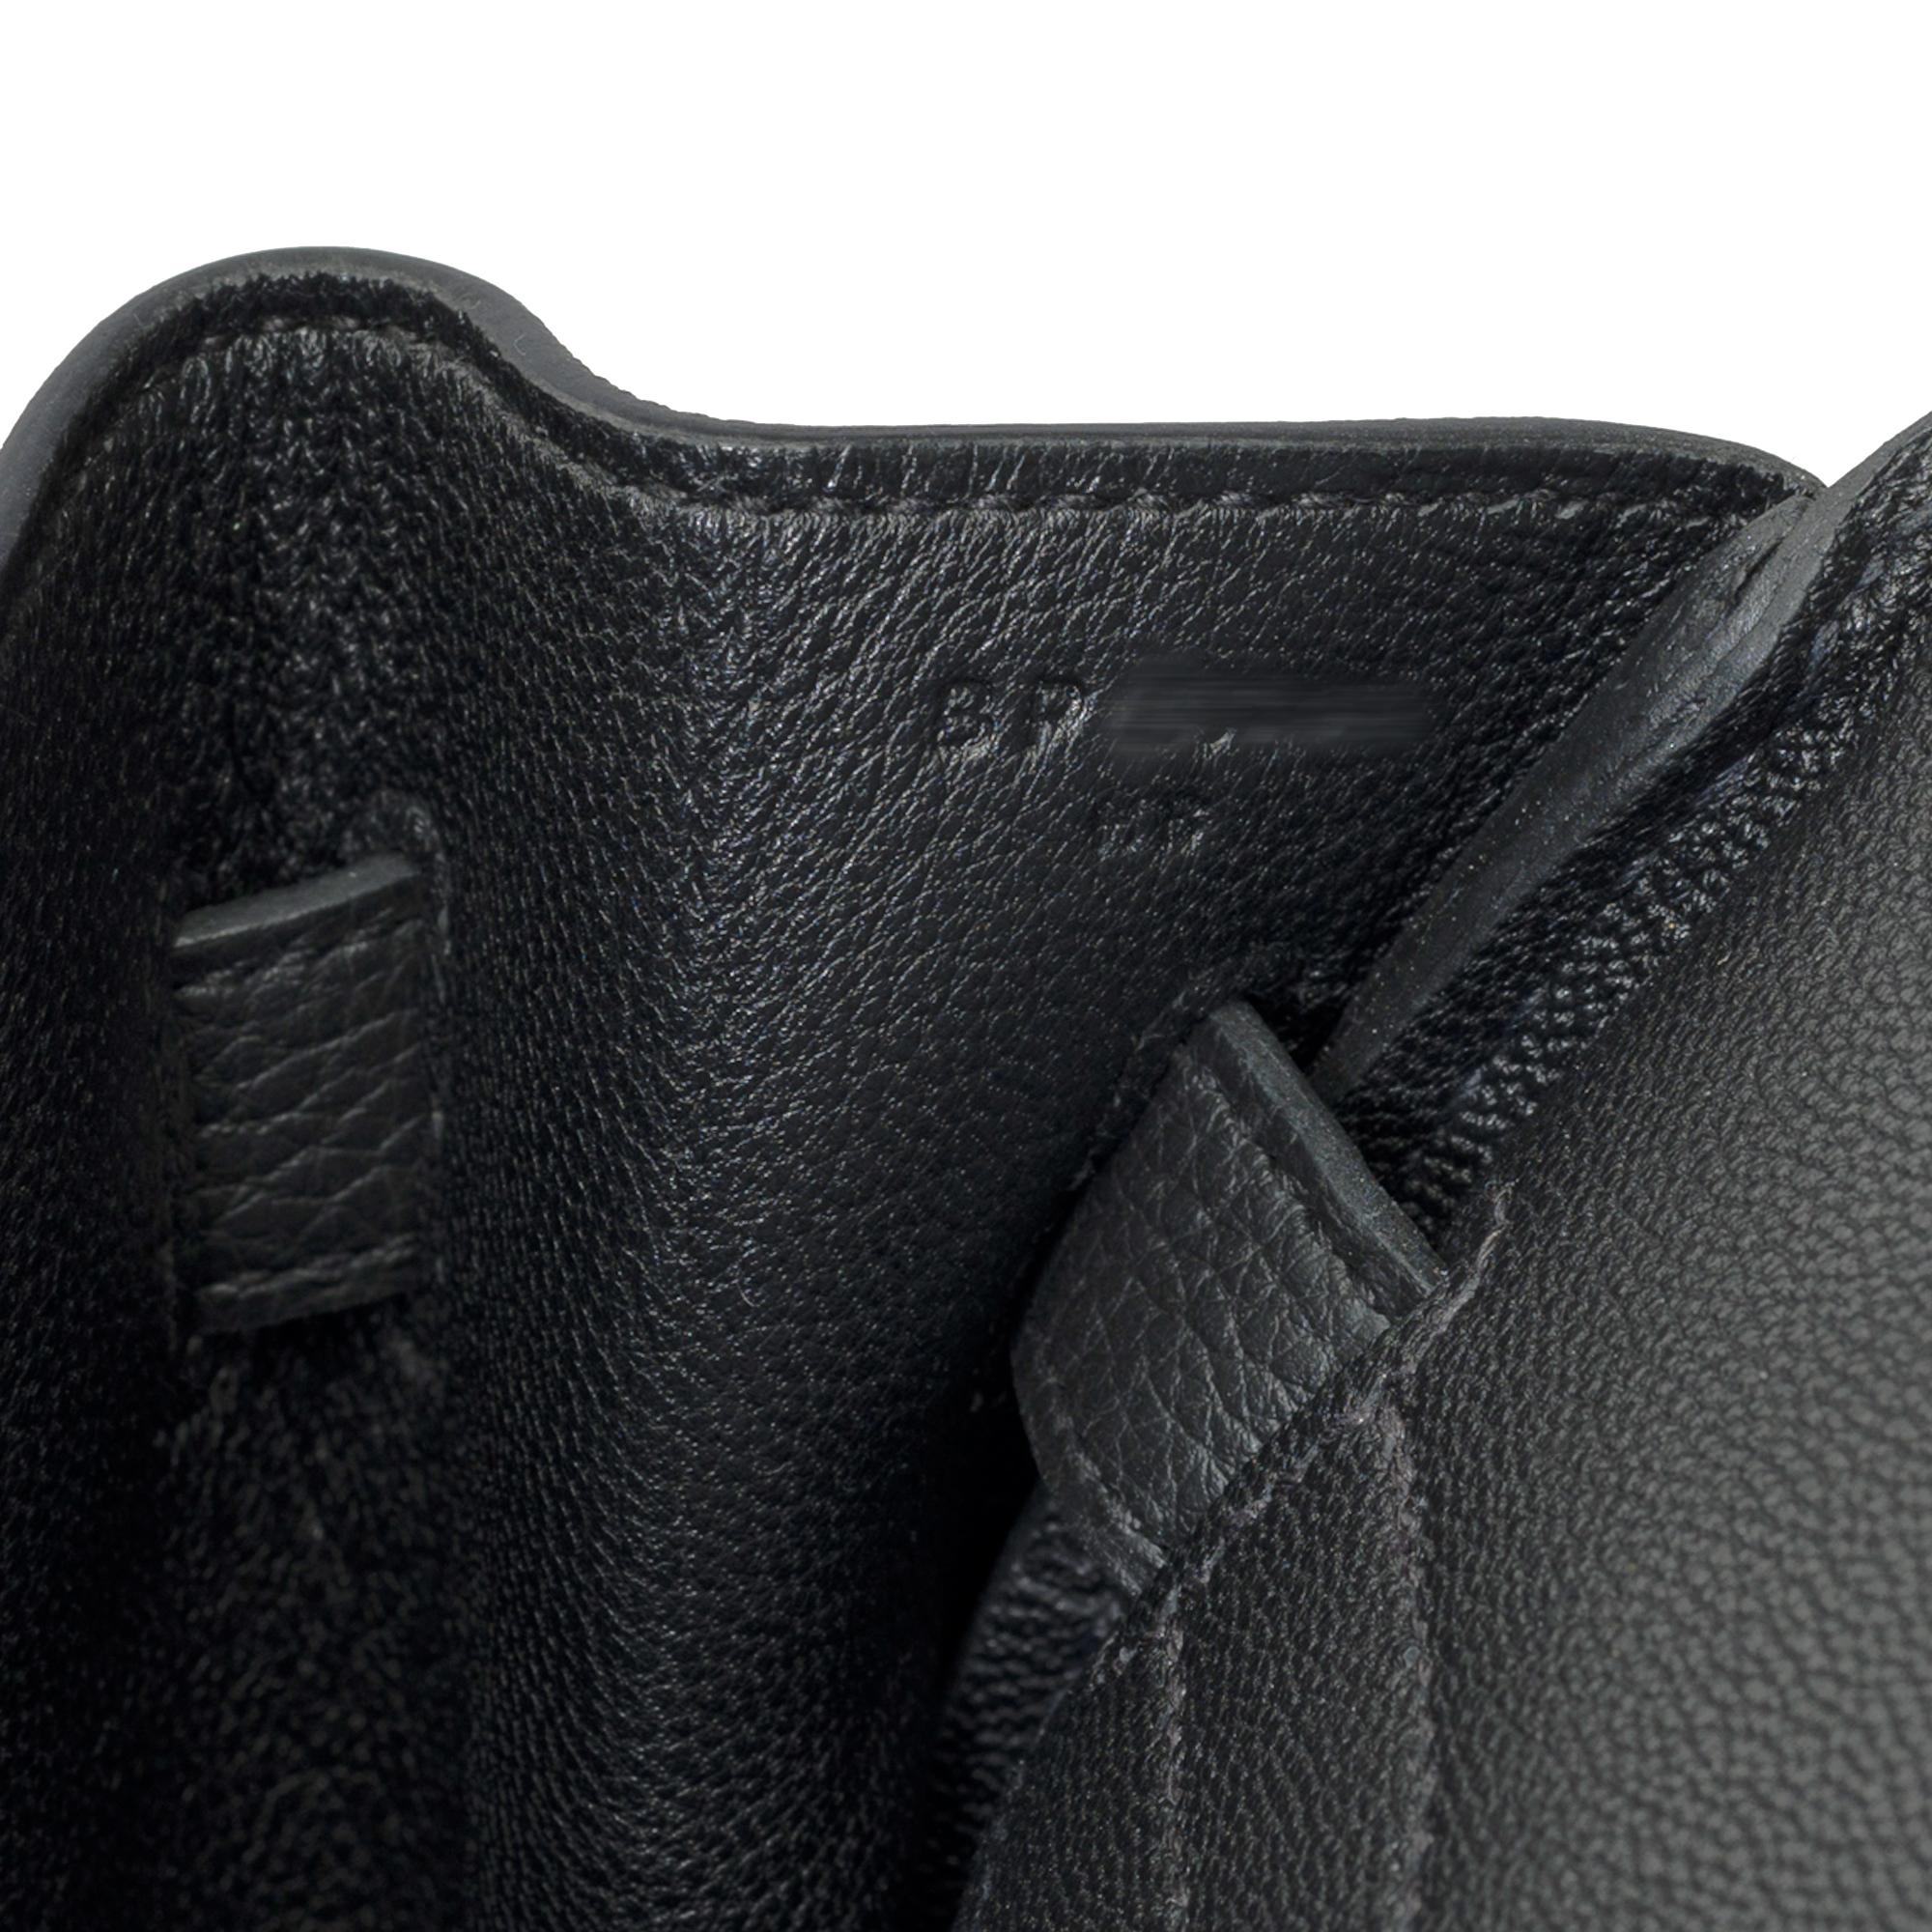 Splendid Hermes Birkin 30 handbag in Black Togo leather, SHW For Sale 3